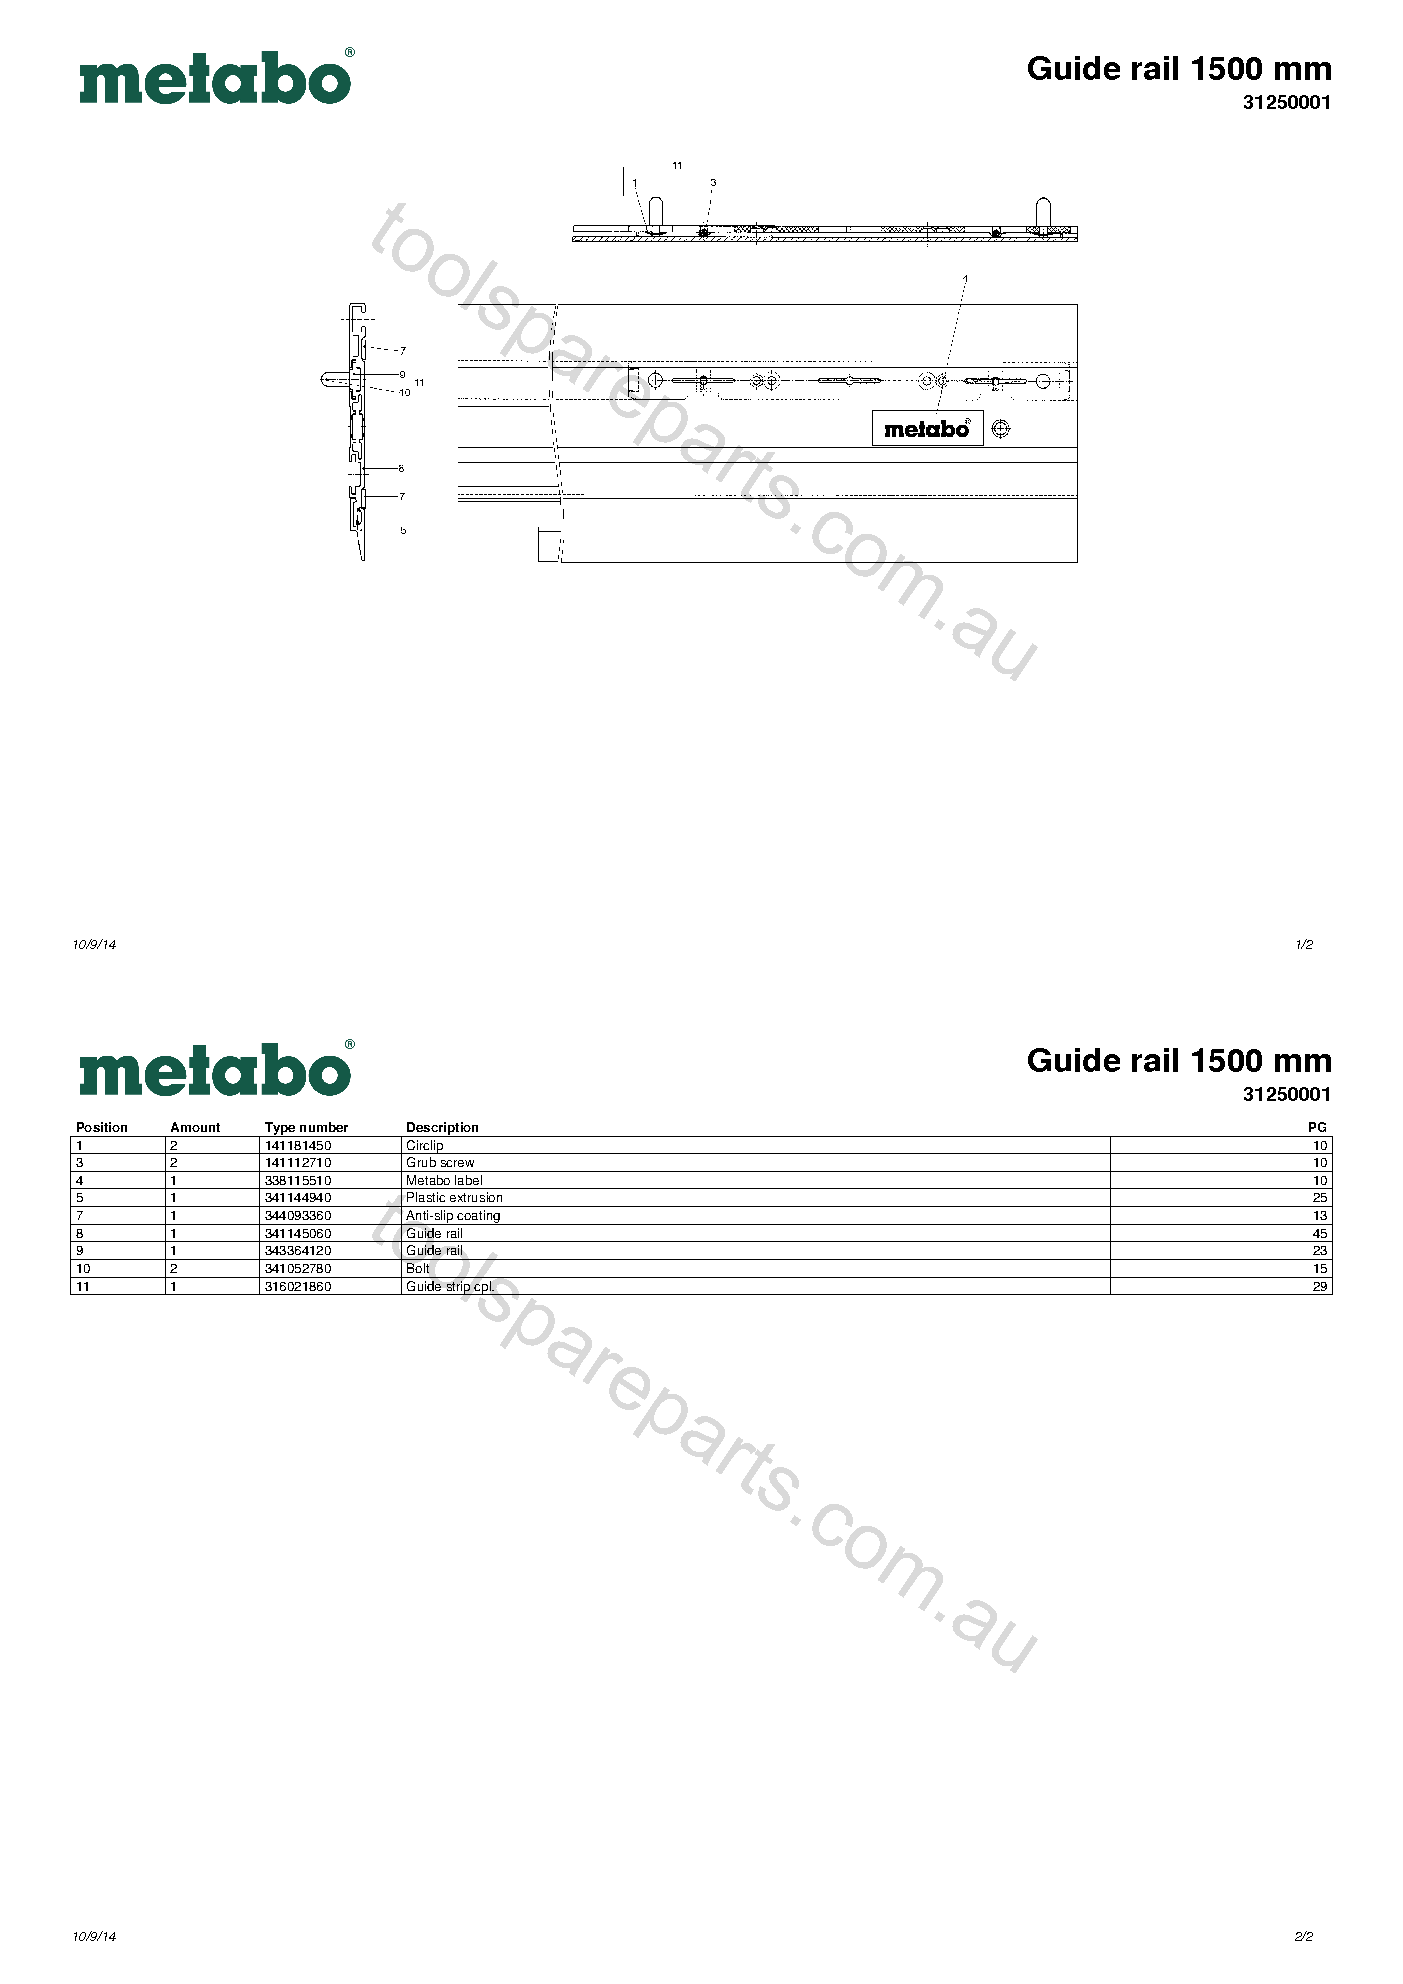 Metabo Guide rail 1500 mm 31250001  Diagram 1